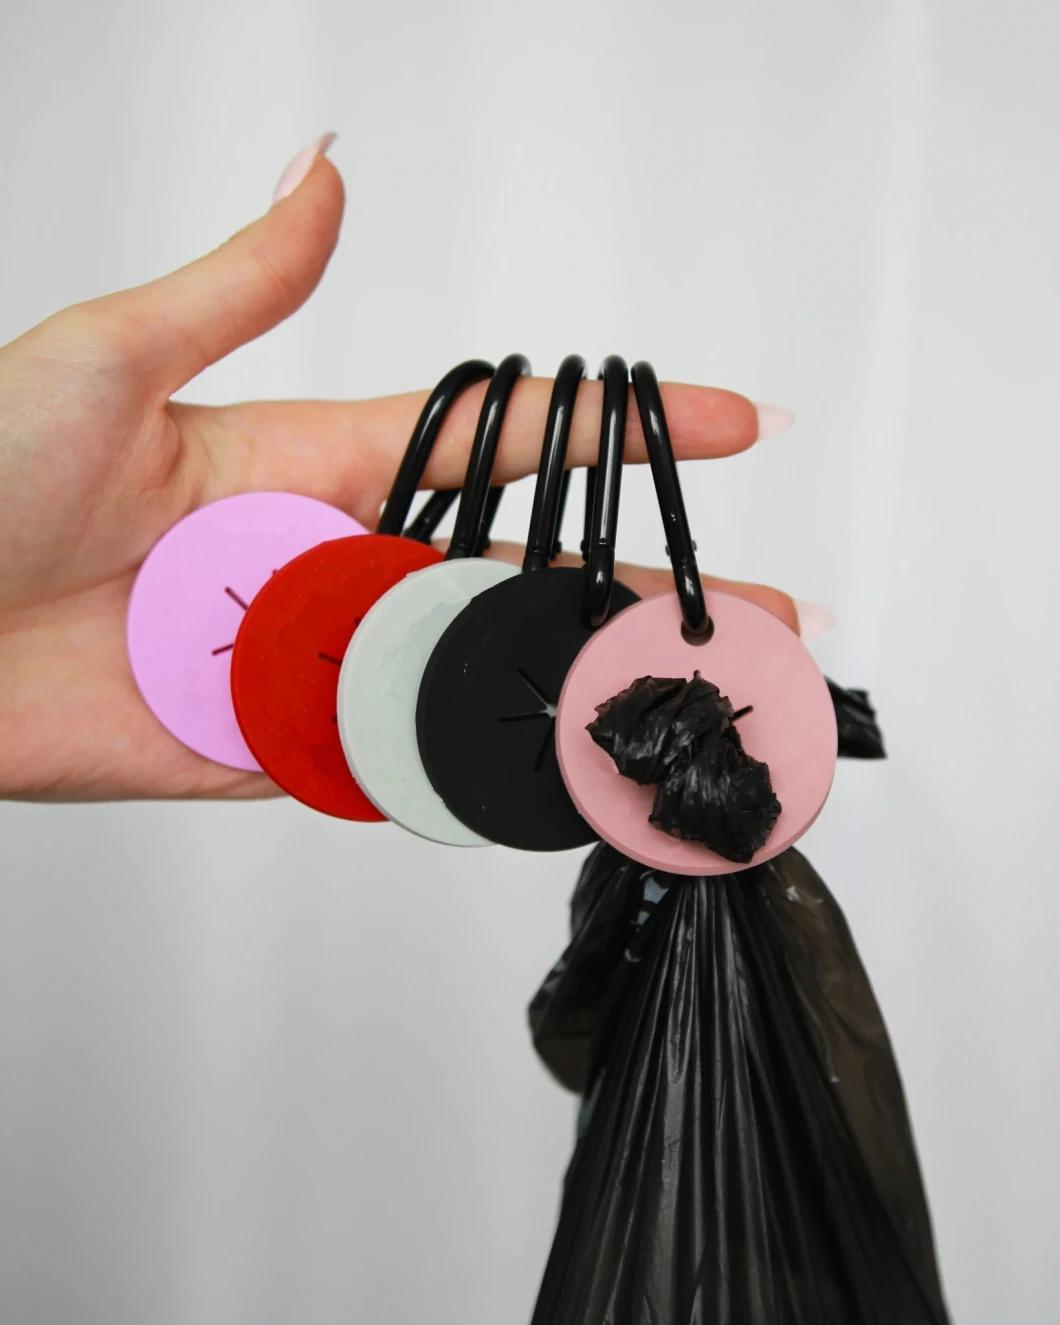 Customized Logo & Color Dog Poo Bag Holder PVC Silicone Clip Keychain Keyring, Waste Bag Carrier